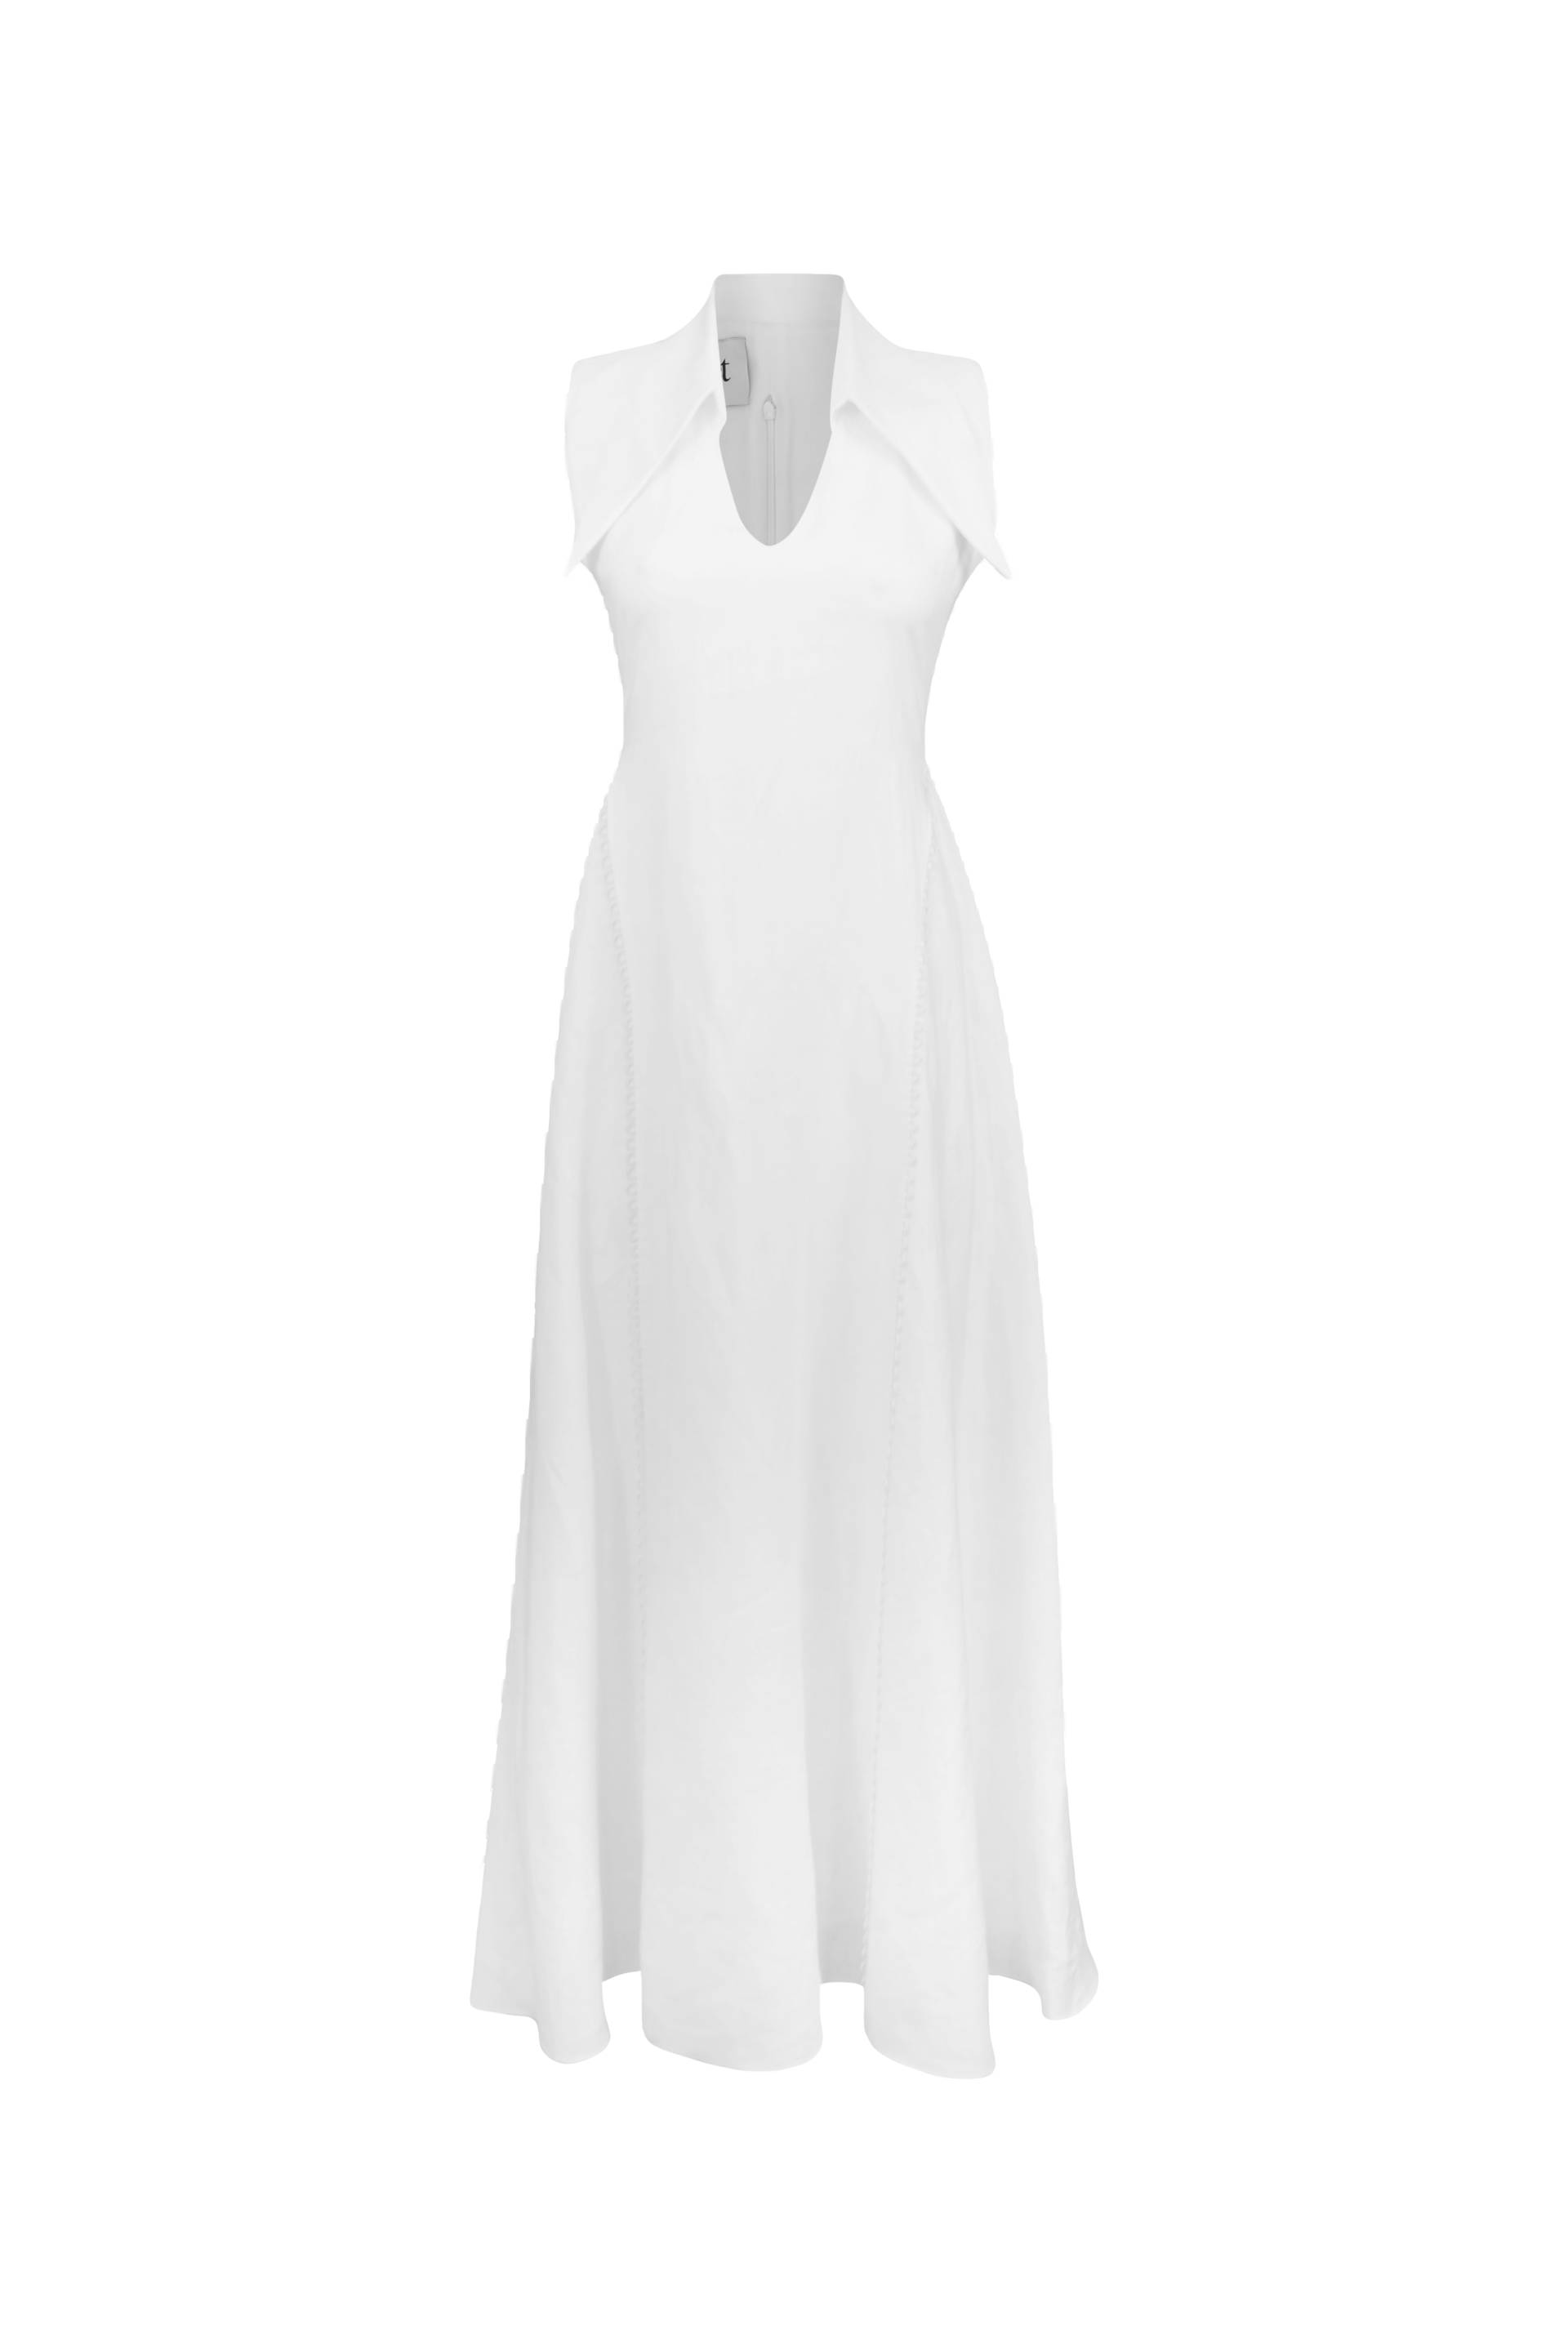 AMARI Sleeveless Maxi White Linen Dress von MAET